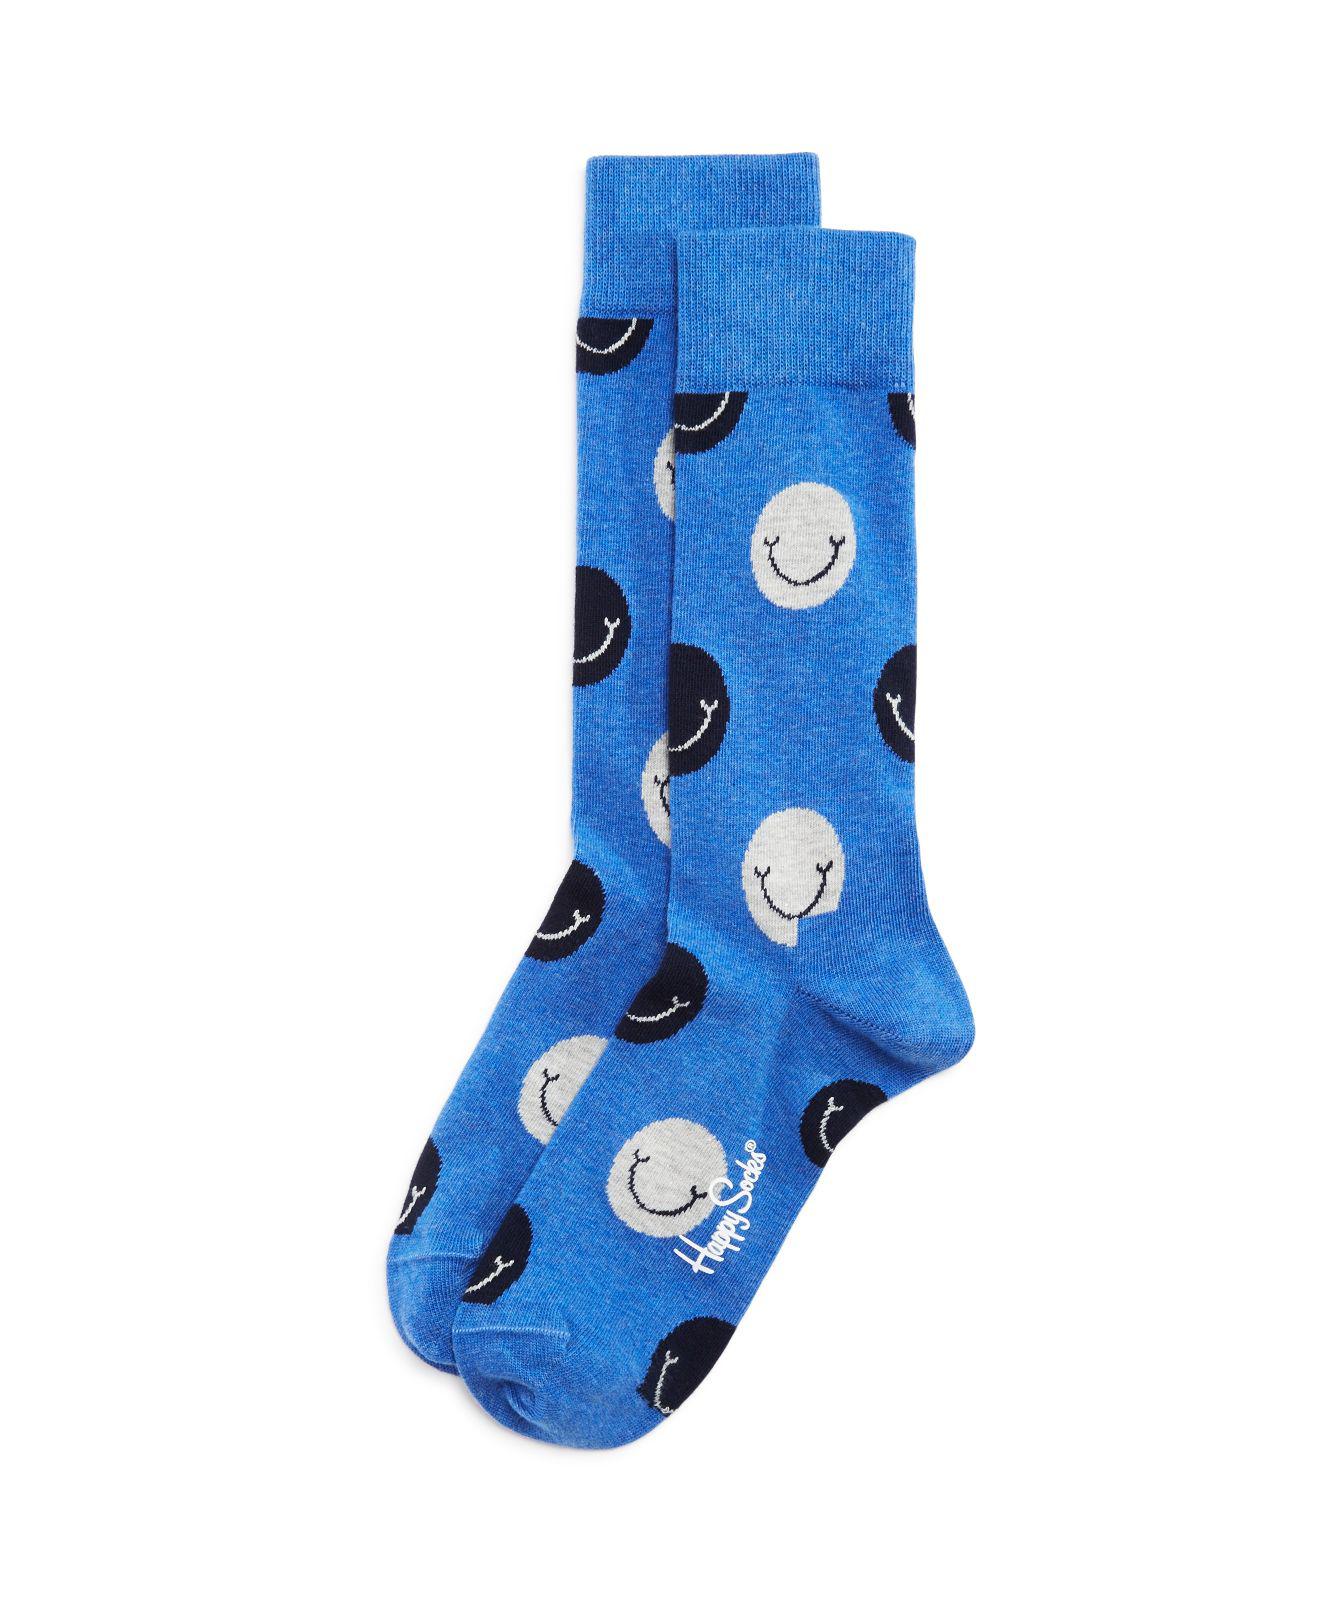 Lyst - Happy Socks Smiley Face Socks in Blue for Men